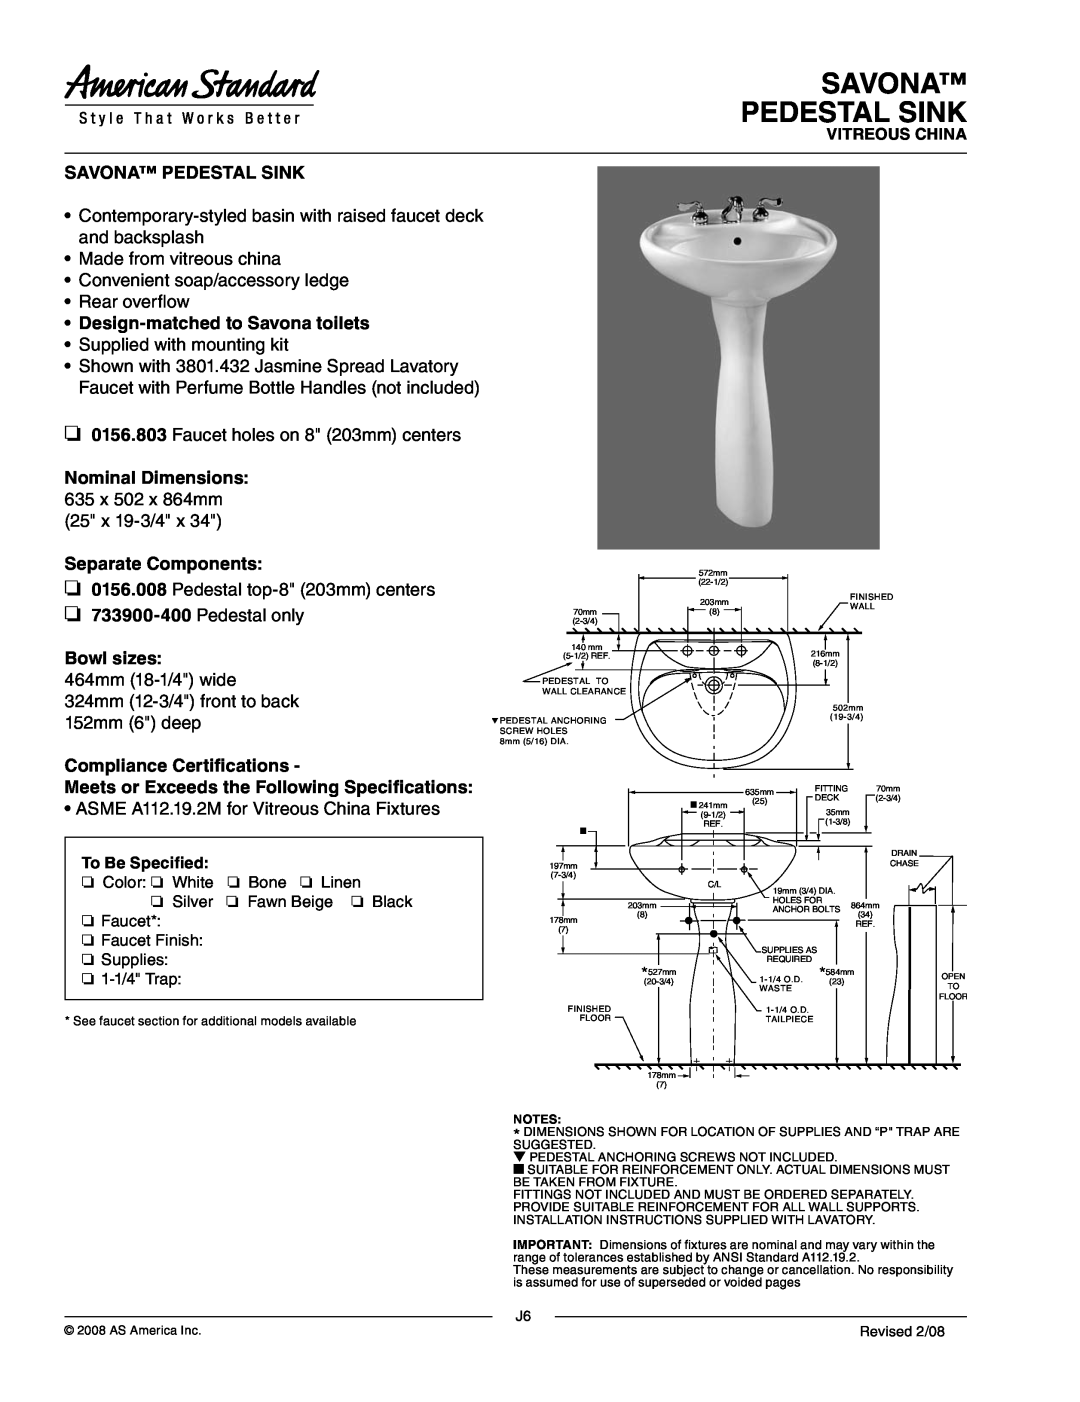 American Standard 0156.803, 0156.008 dimensions Savona Pedestal Sink, Design-matchedto Savona toilets, Separate Components 